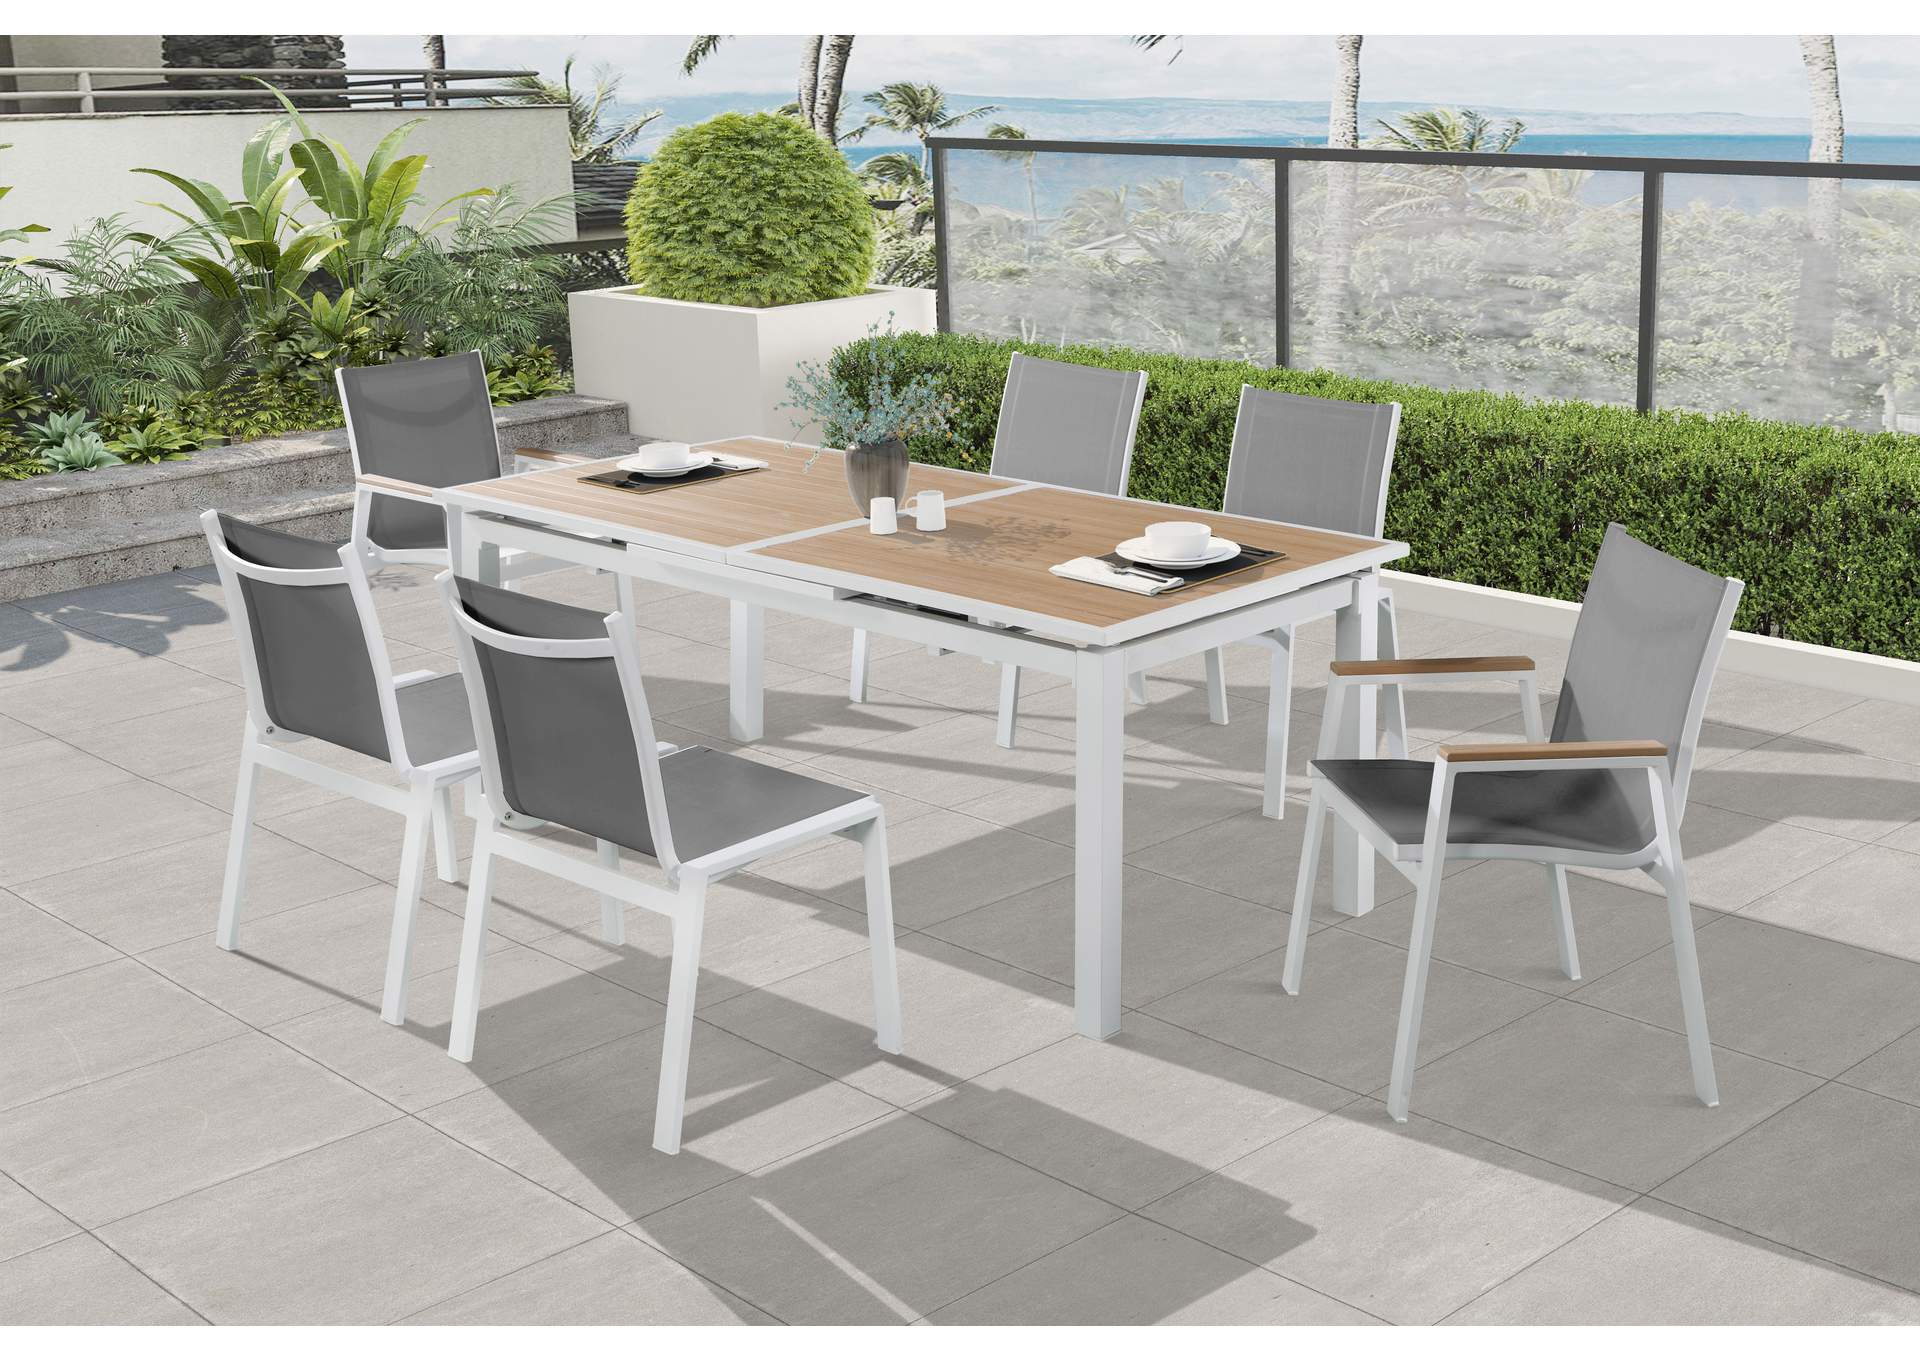 Nizuc Grey Mesh Water Resistant Fabric Outdoor Patio Aluminum Mesh Dining Arm Chair Set of 2,Meridian Furniture